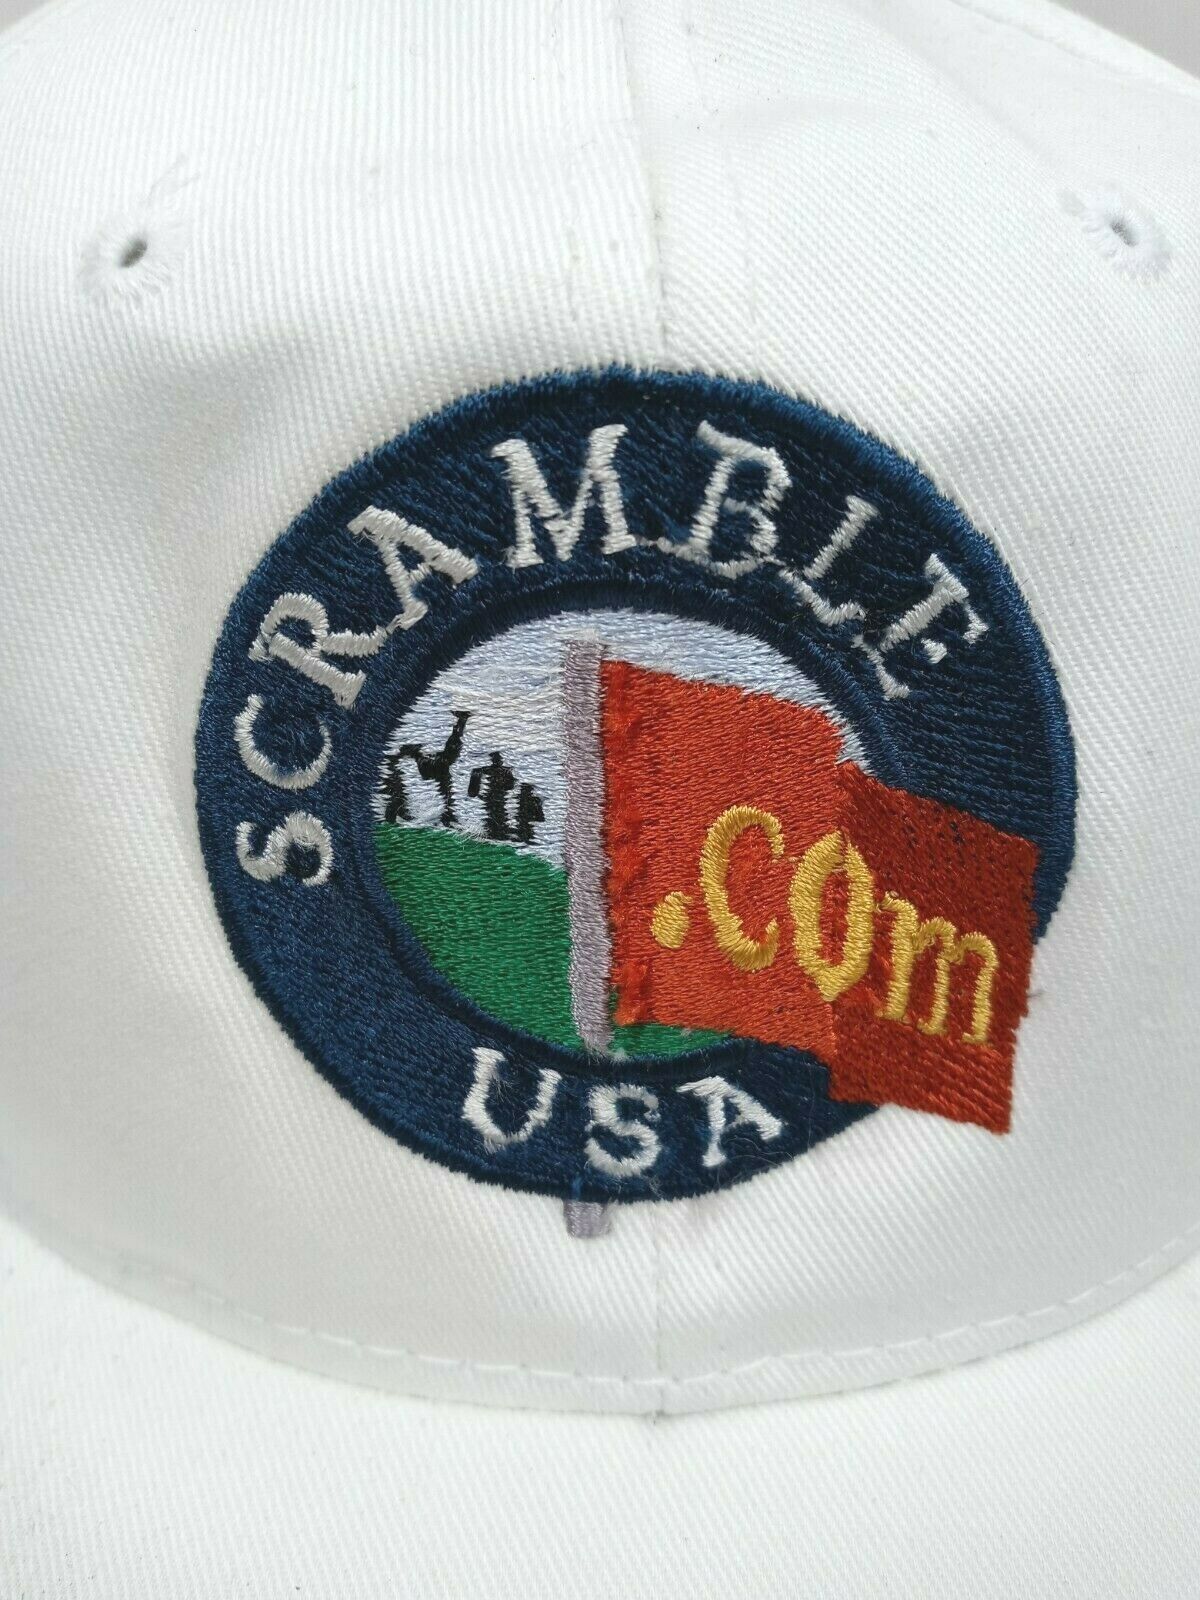 Primary image for Vintage Triangle Headwear Scramble.com USA White Adjustable Baseball Cap Hat